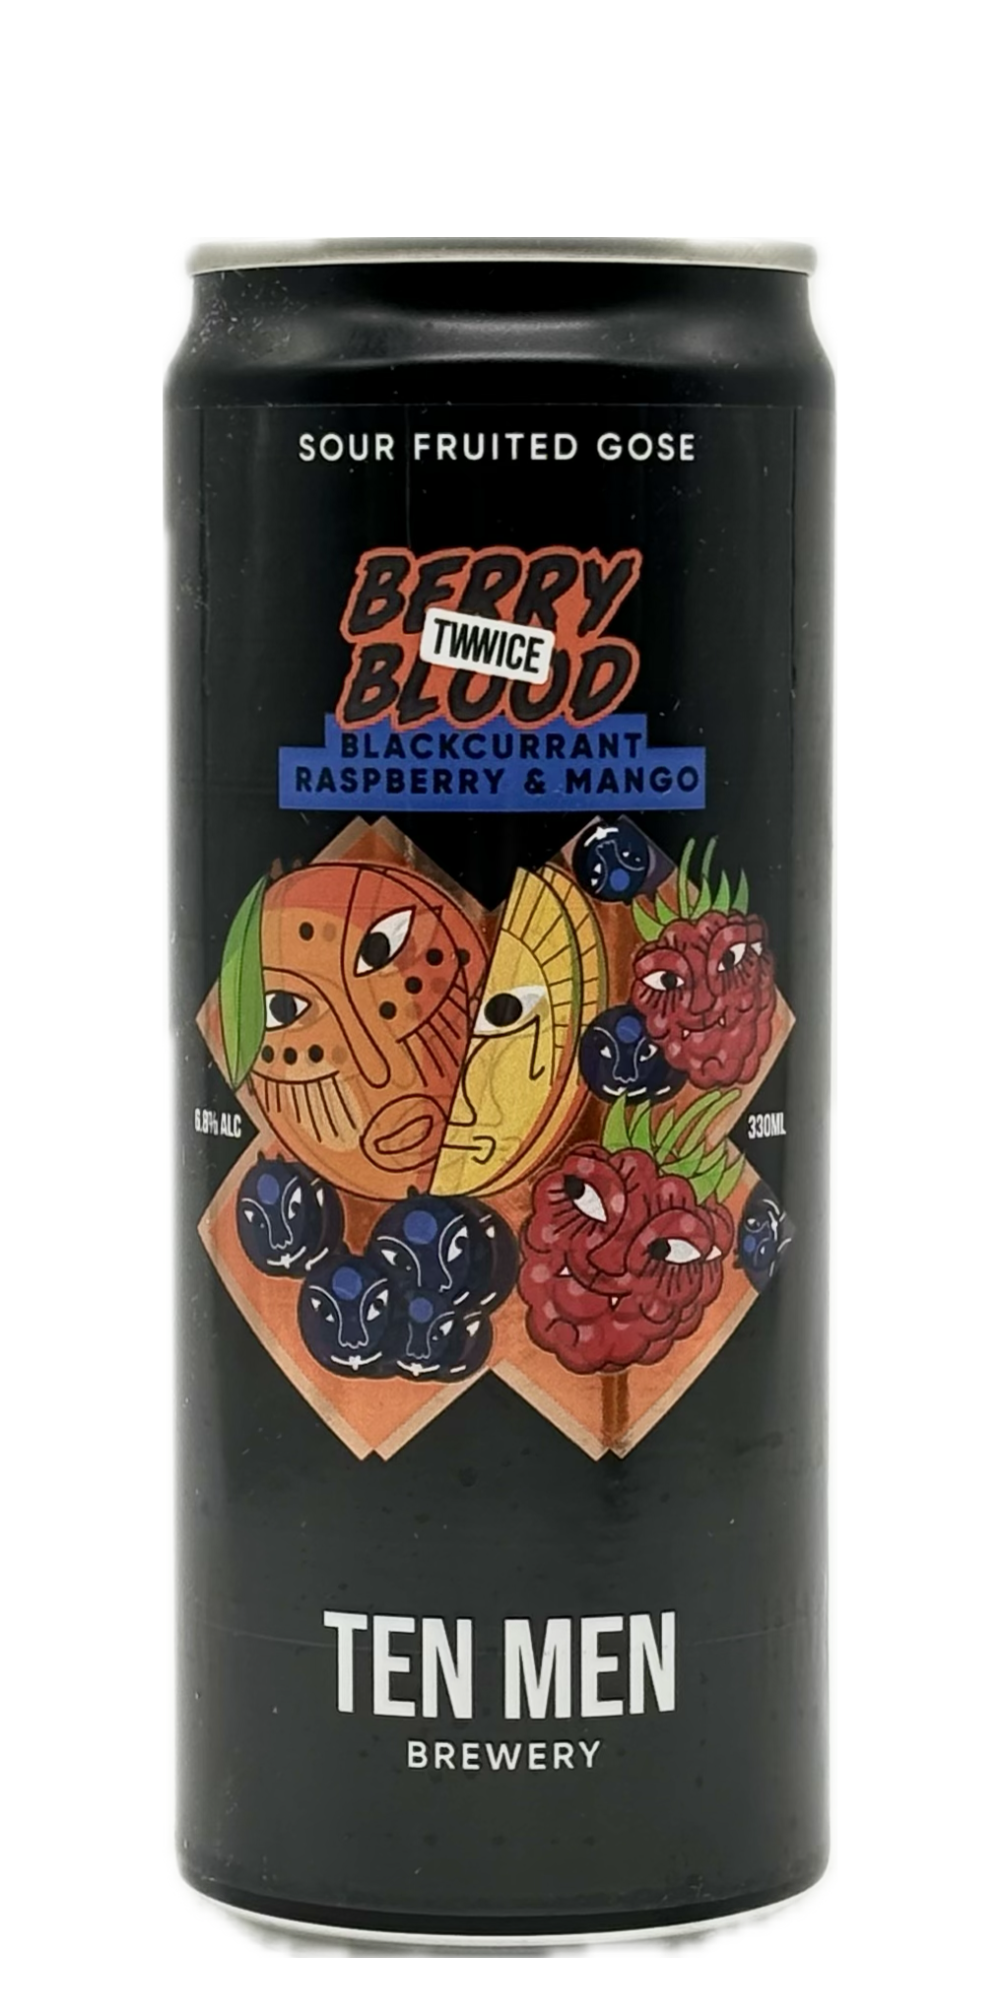 Ten Men - Twice Berry Blood: Blackcurrant, Raspberry & Mango